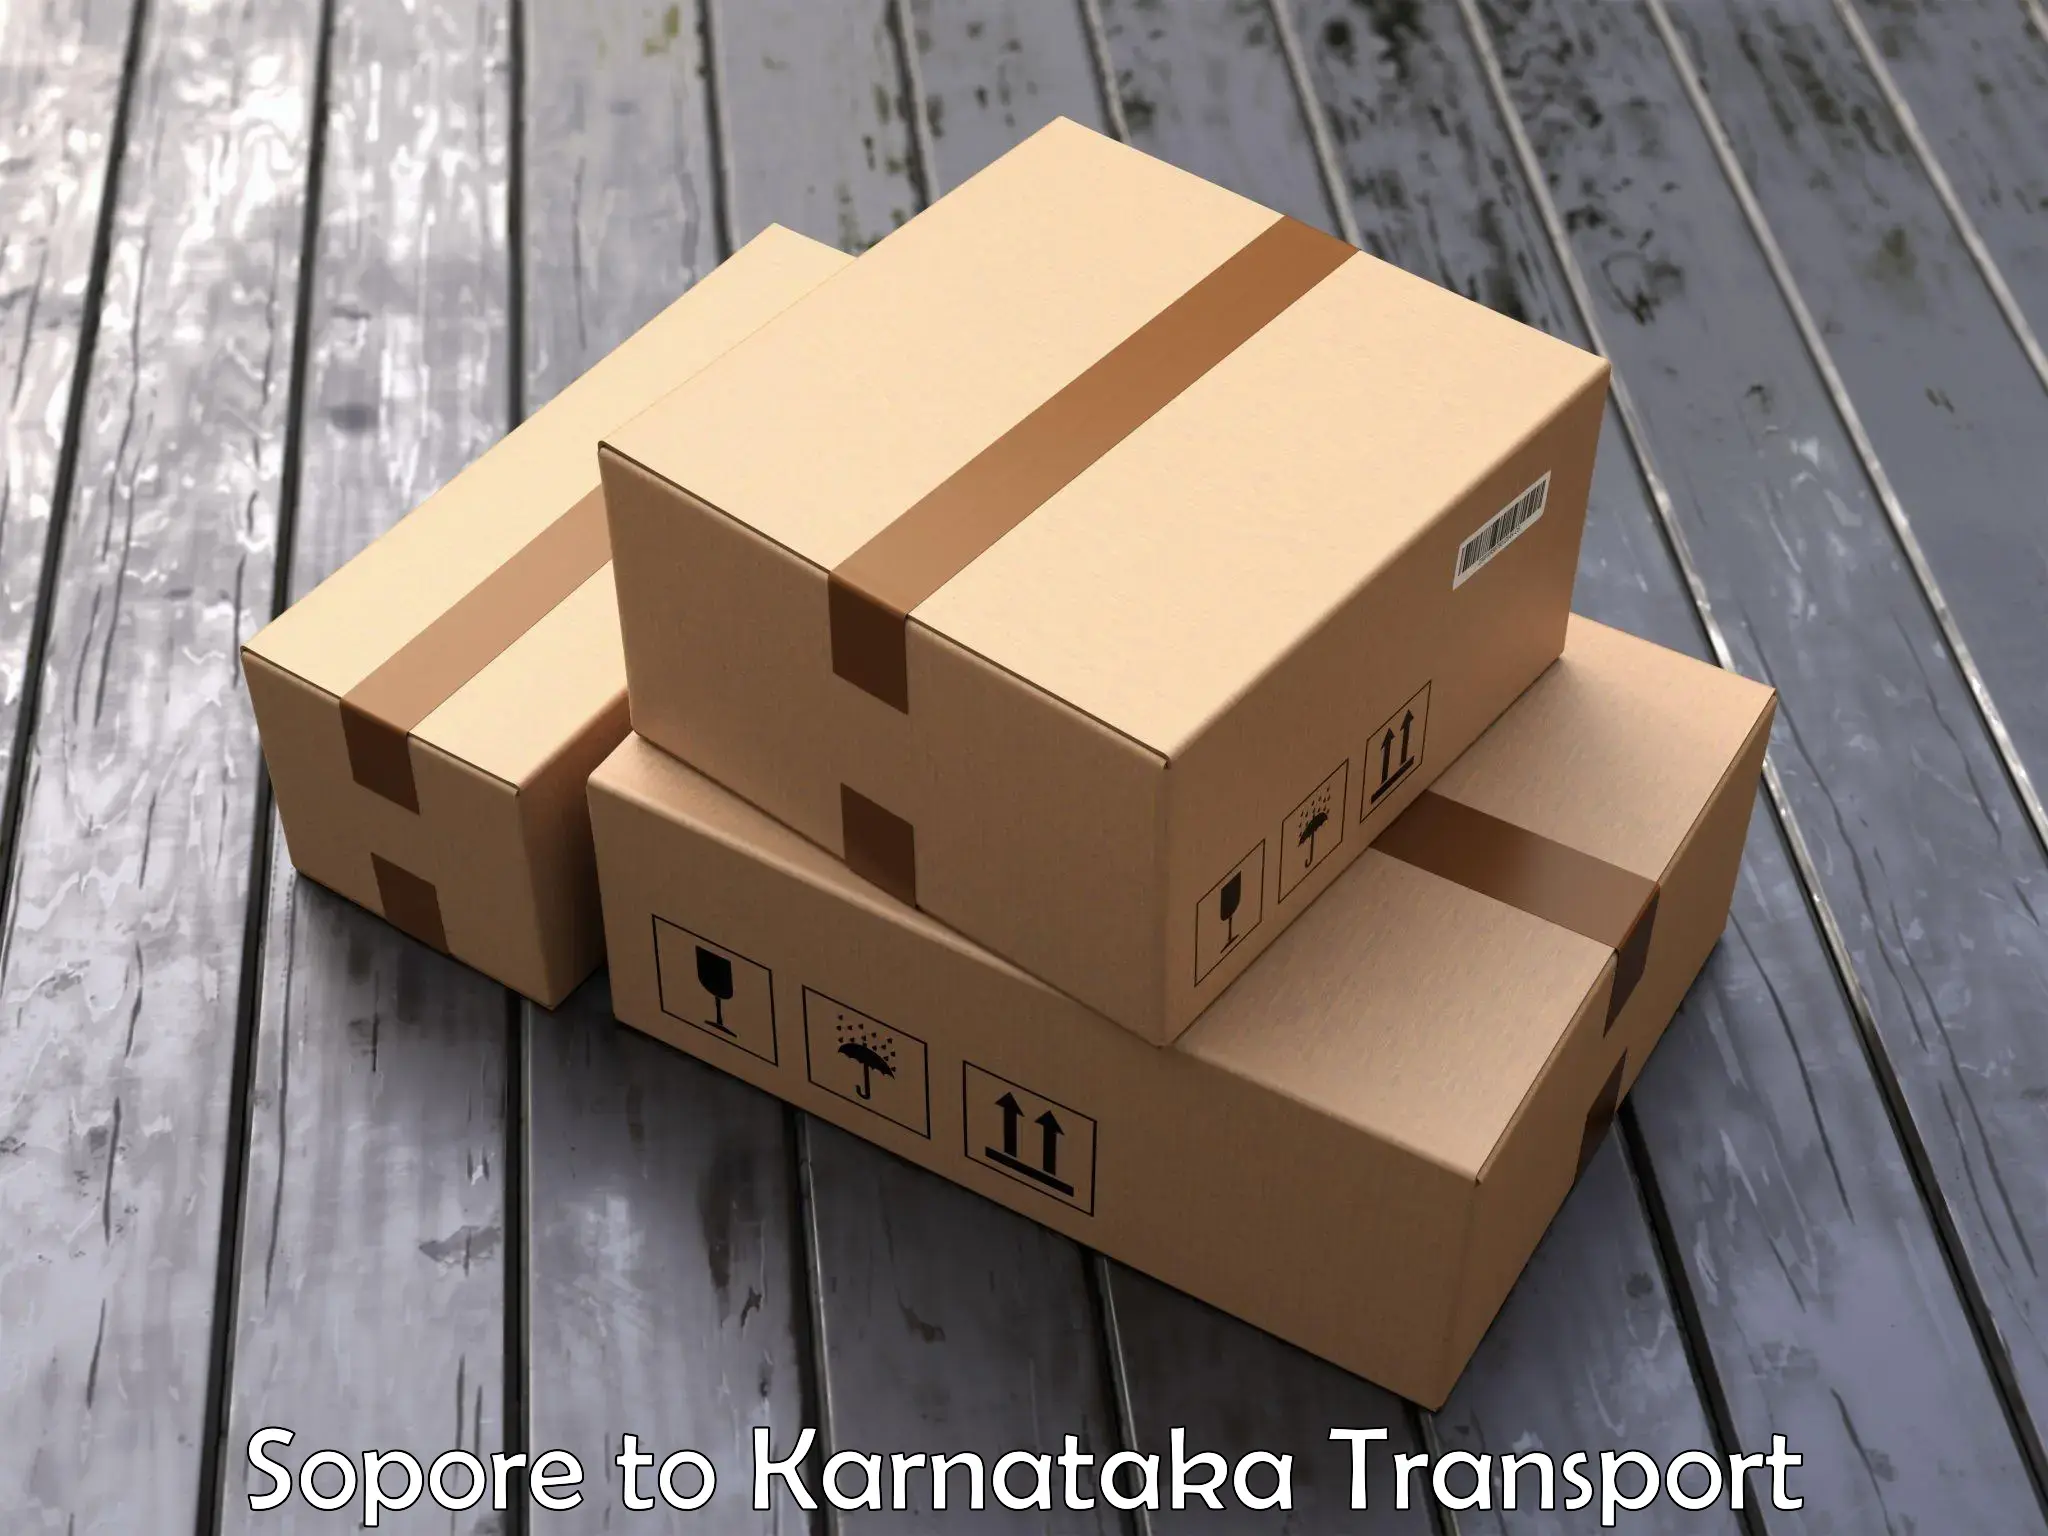 Online transport service Sopore to Honnavar